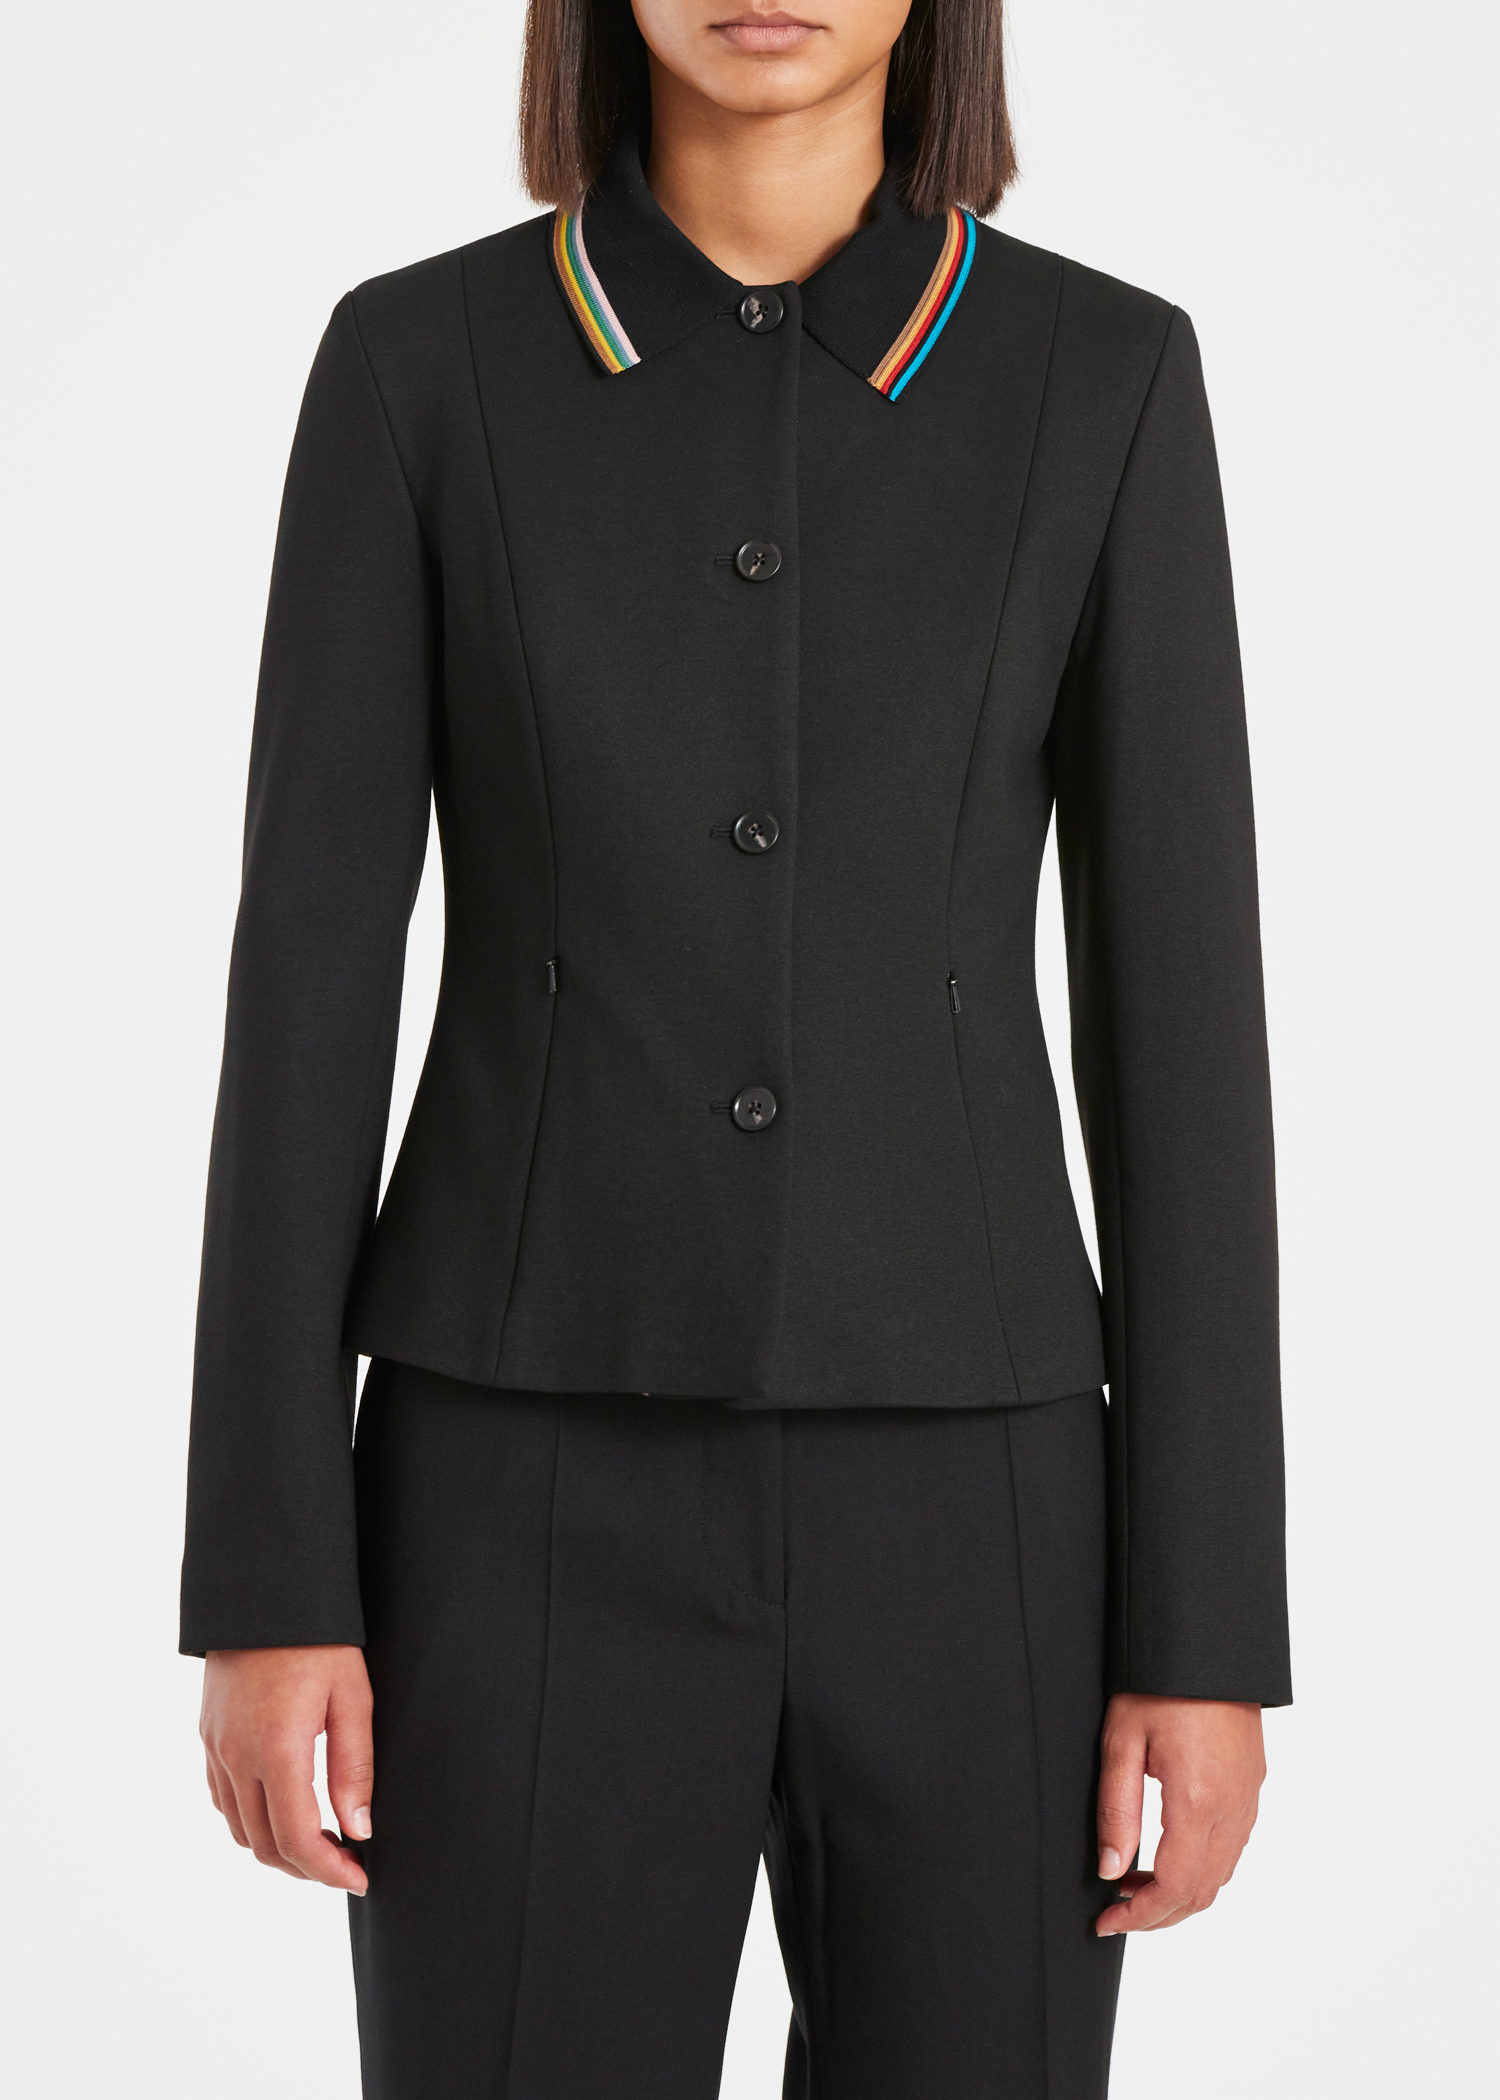 Women's Black 'Signature Stripe' Trim Jacket